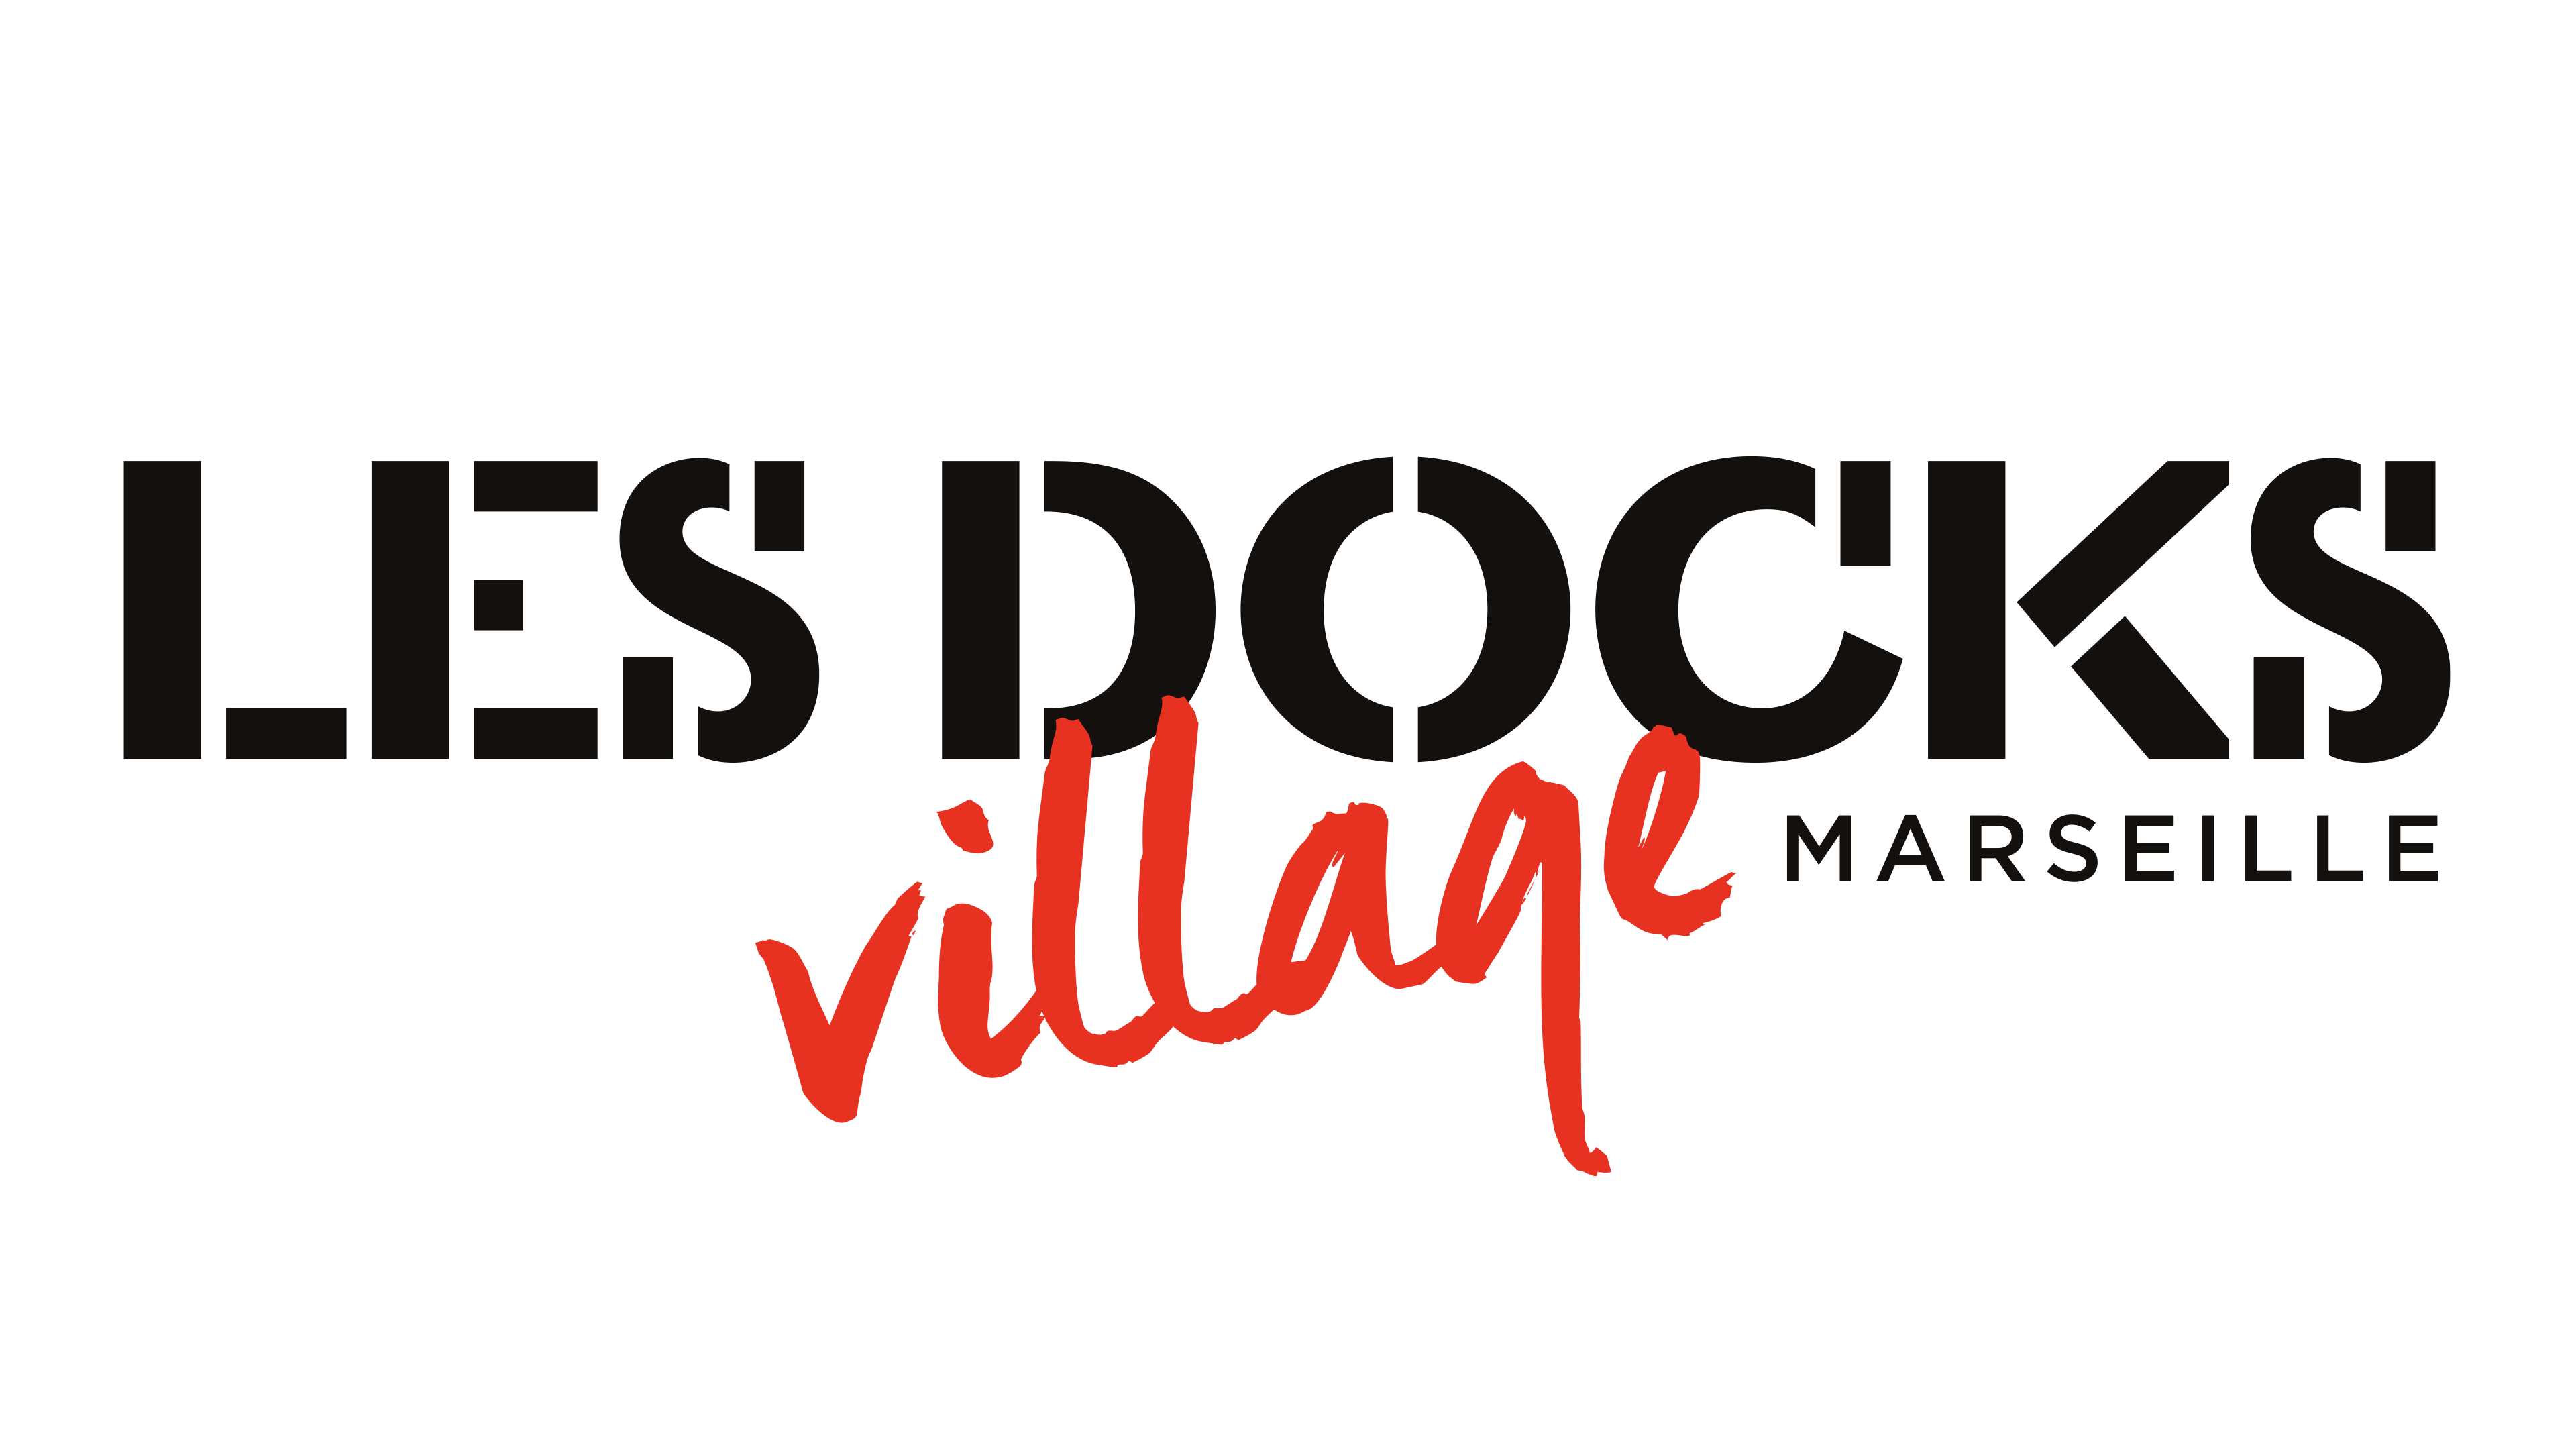 les docks village logo